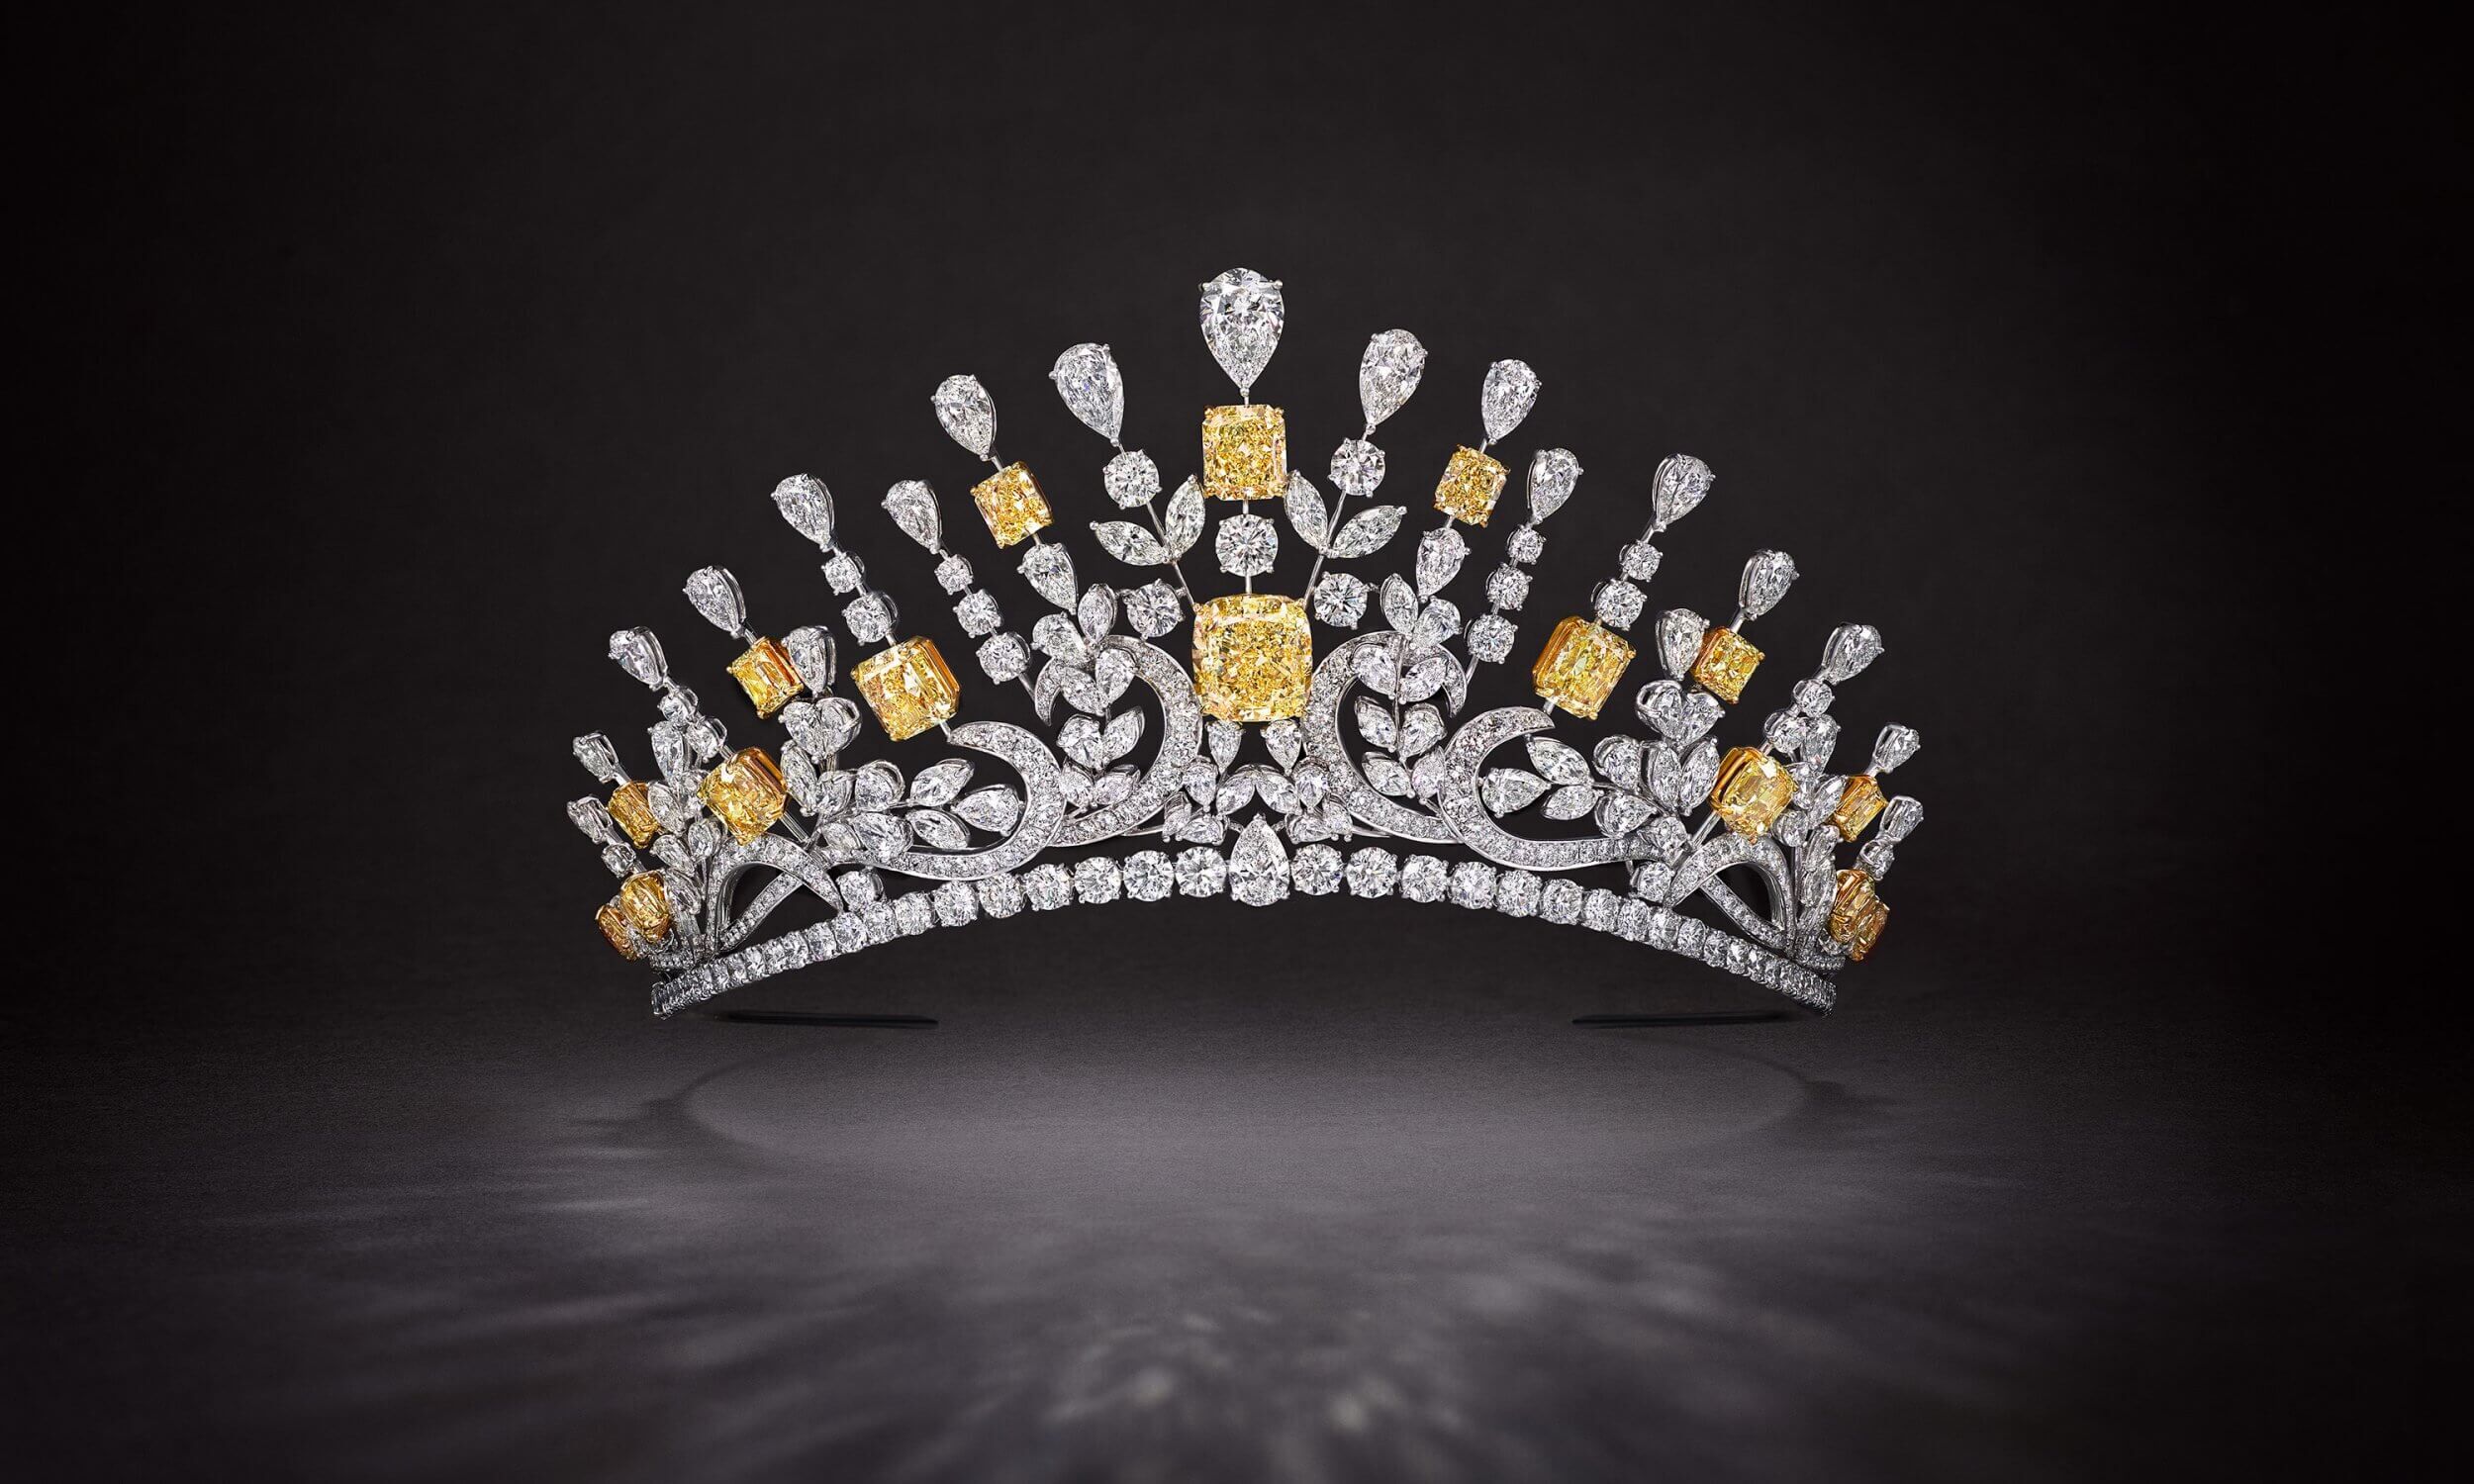 Graff-Diamonds-Crowning-Glory-Article-Wide-Image1-Yellow-and-white-diamond-tiara-177.64cts-2500x1500.jpg